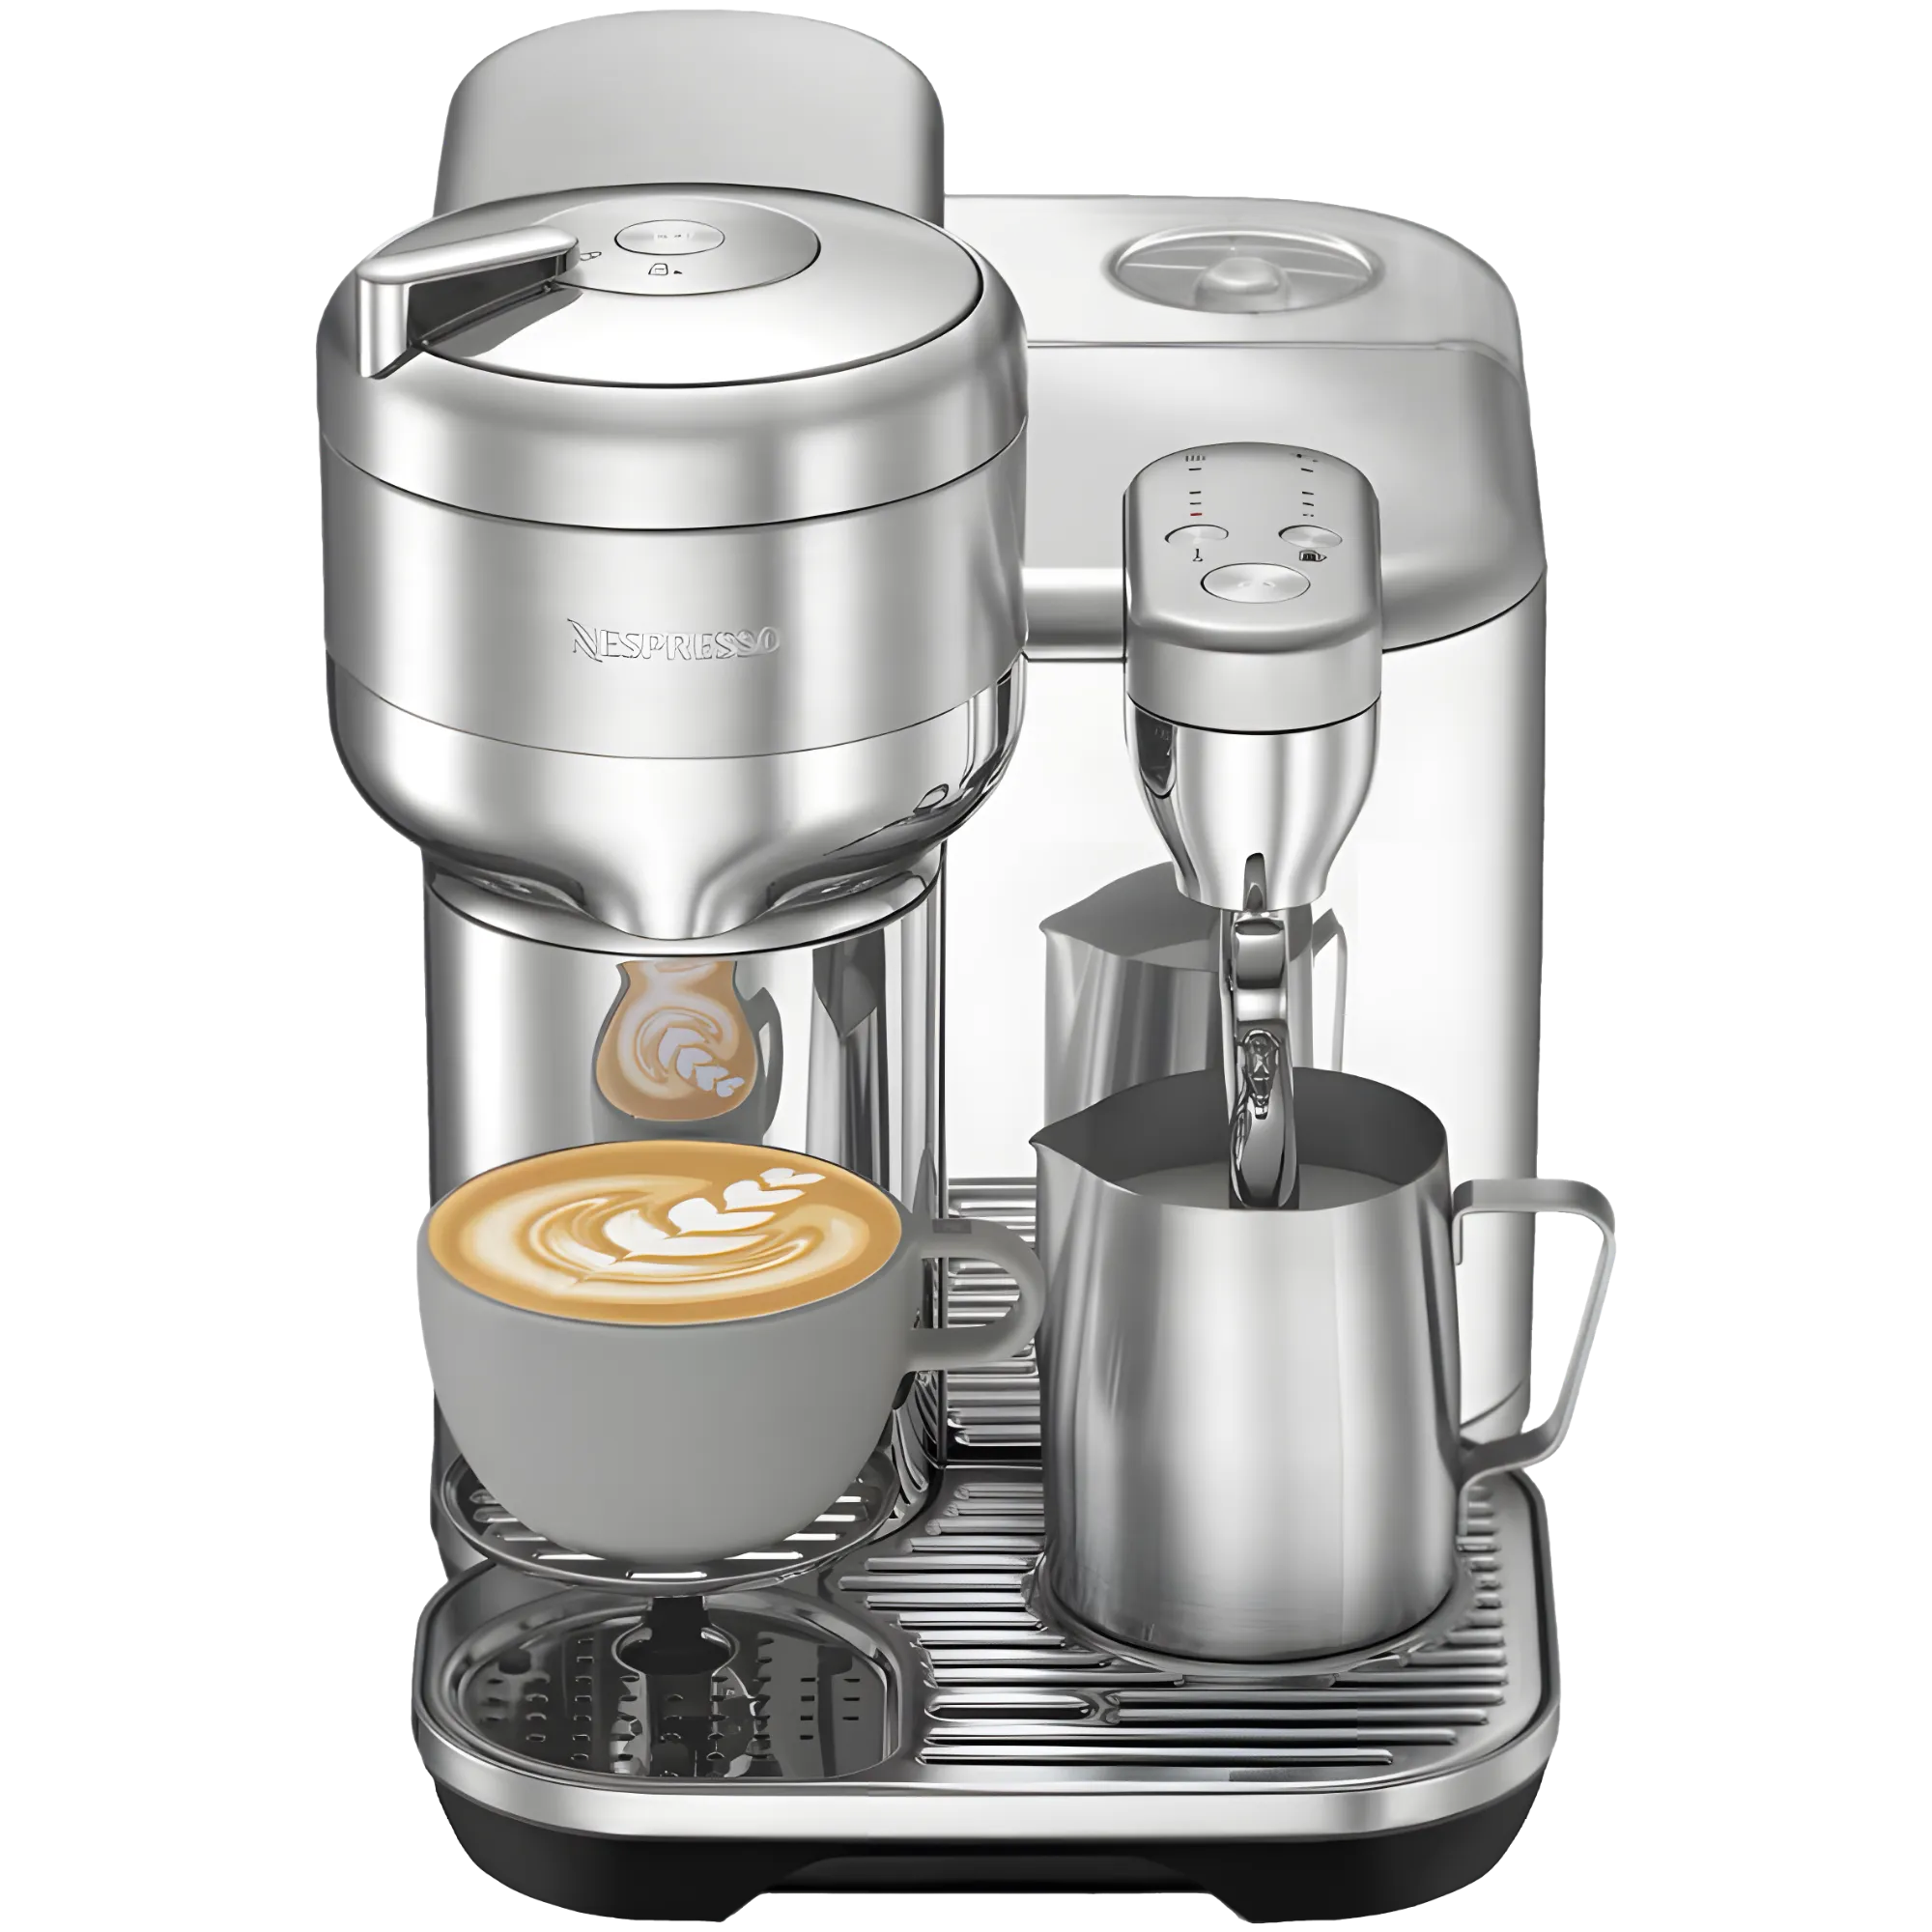 Free Nespresso Vertuo Creatista Coffee Machine Worth £700 For Winners